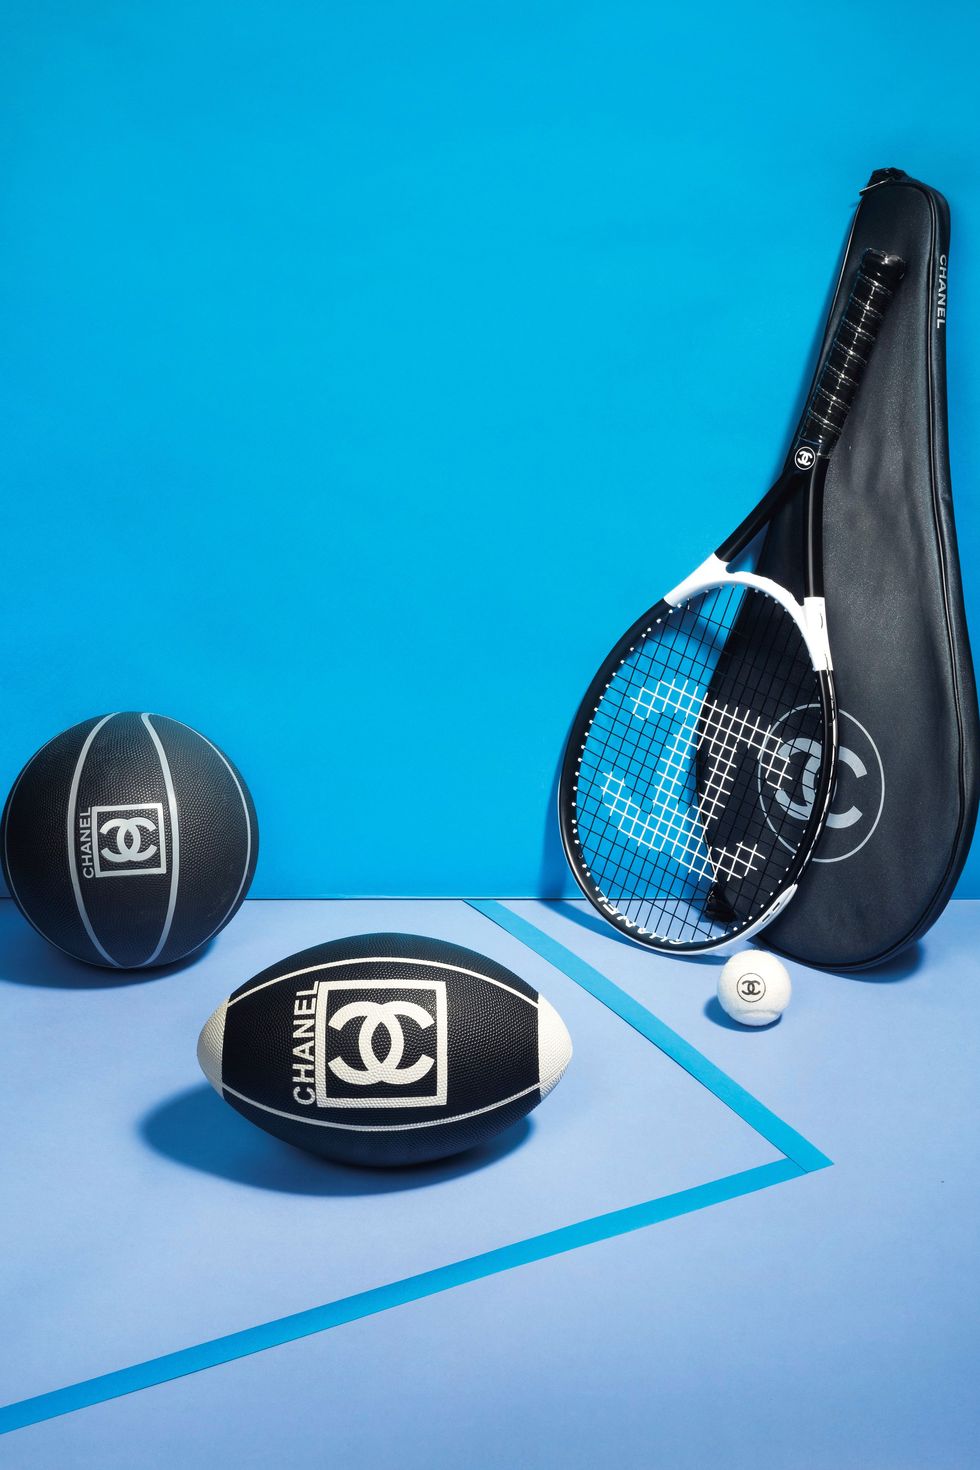 Chanel Tennis Bag 